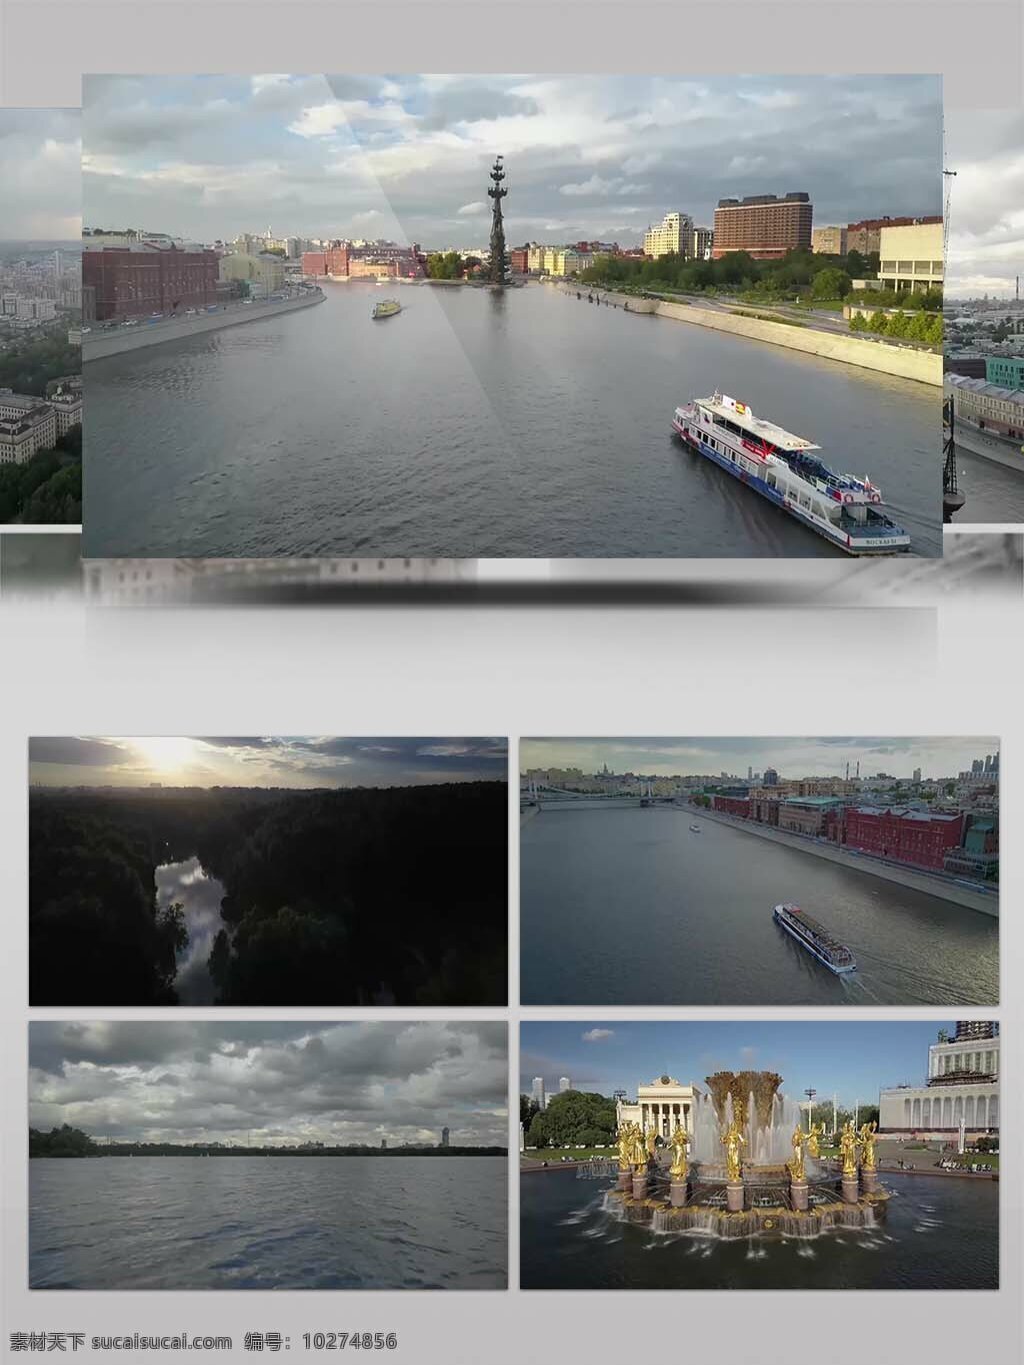 4k 超 清 航拍 莫斯科 城市 景观 视频 俄罗斯 列宁格勒 斯大林格勒 圣彼得堡 欧洲 雕像 艺术 灯光 高楼 大厦 建筑